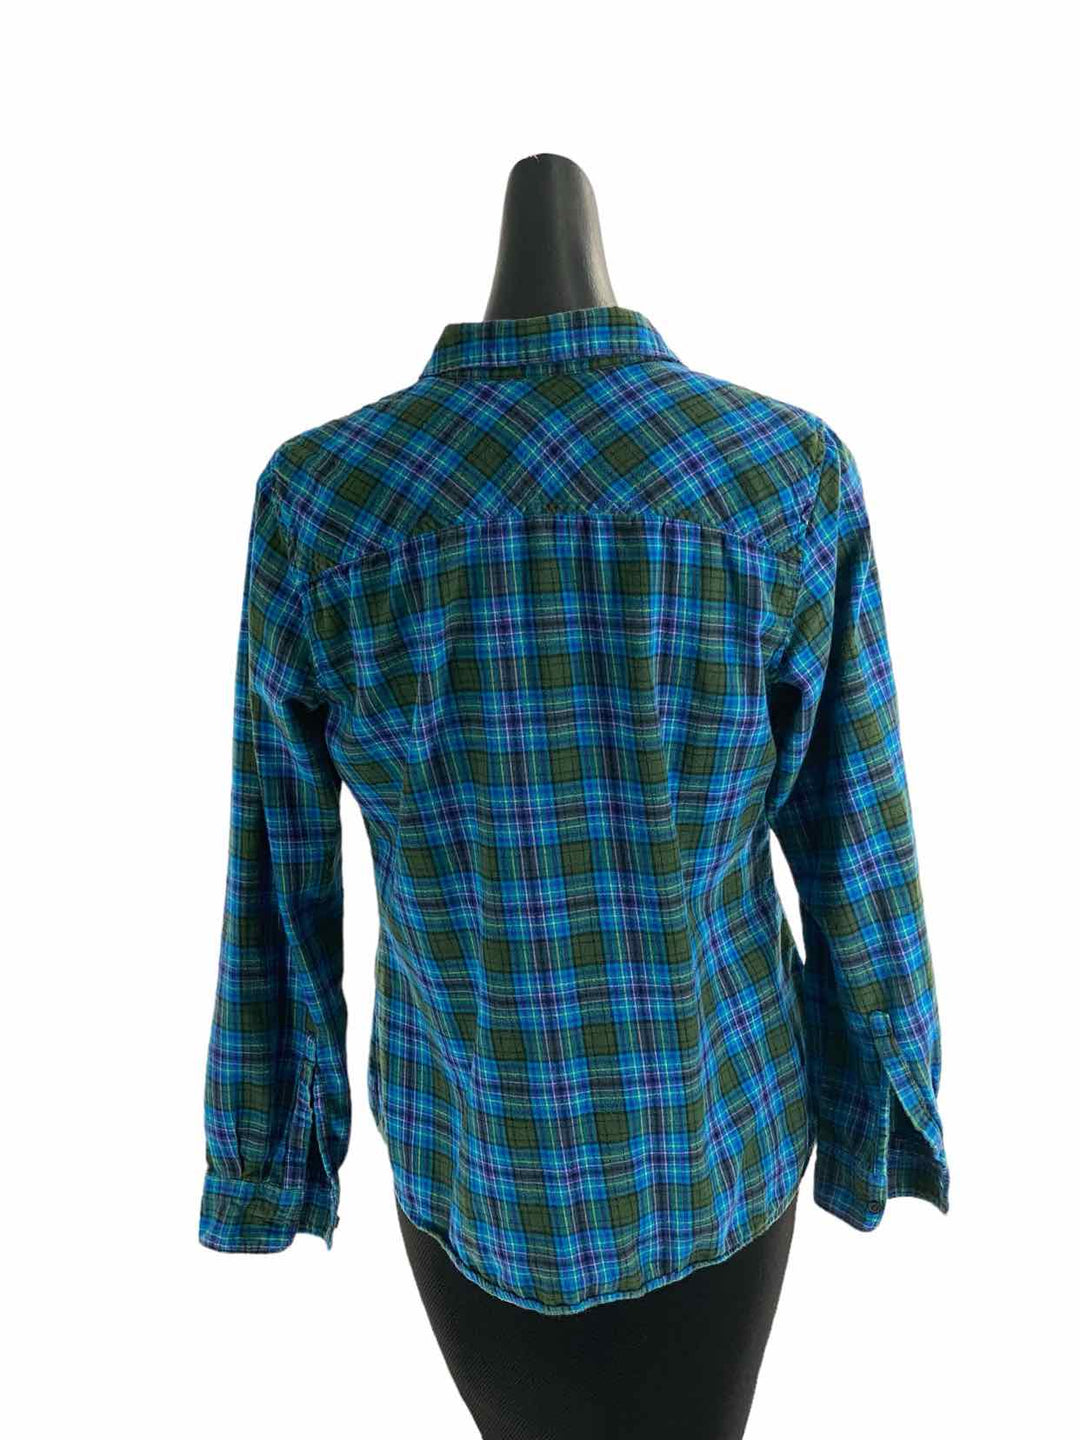 Eddie Bauer Size L Blue Green Plaid Long Sleeve Shirts